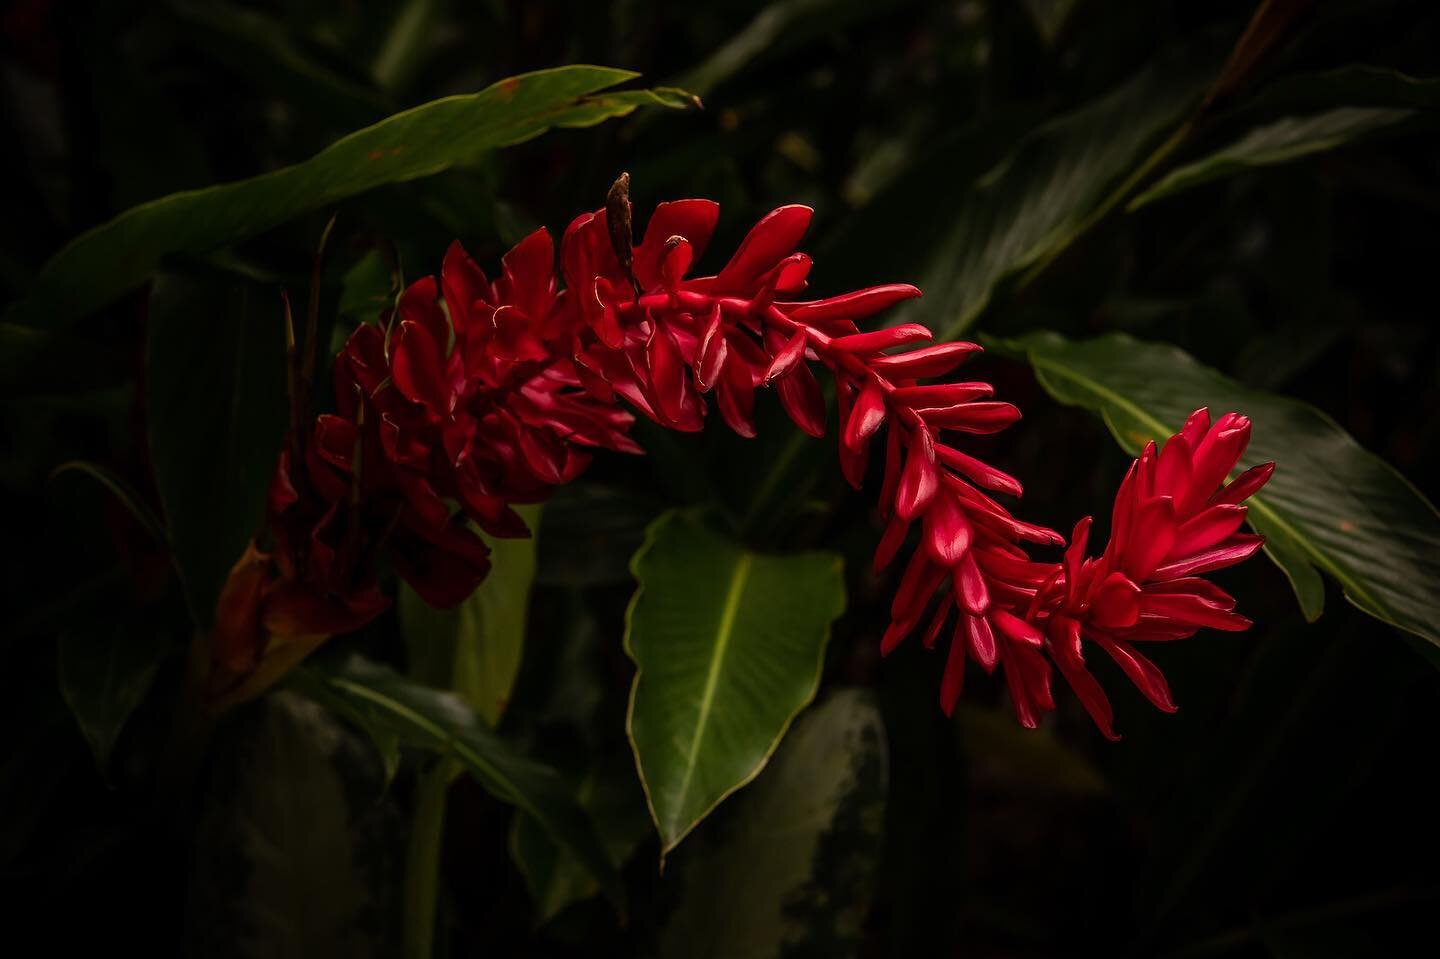 Red Ginger - Alpinia purpurata 
.
.
.
.
.
.
.
.
.
#costarica #tropical #flower #redginger #photography